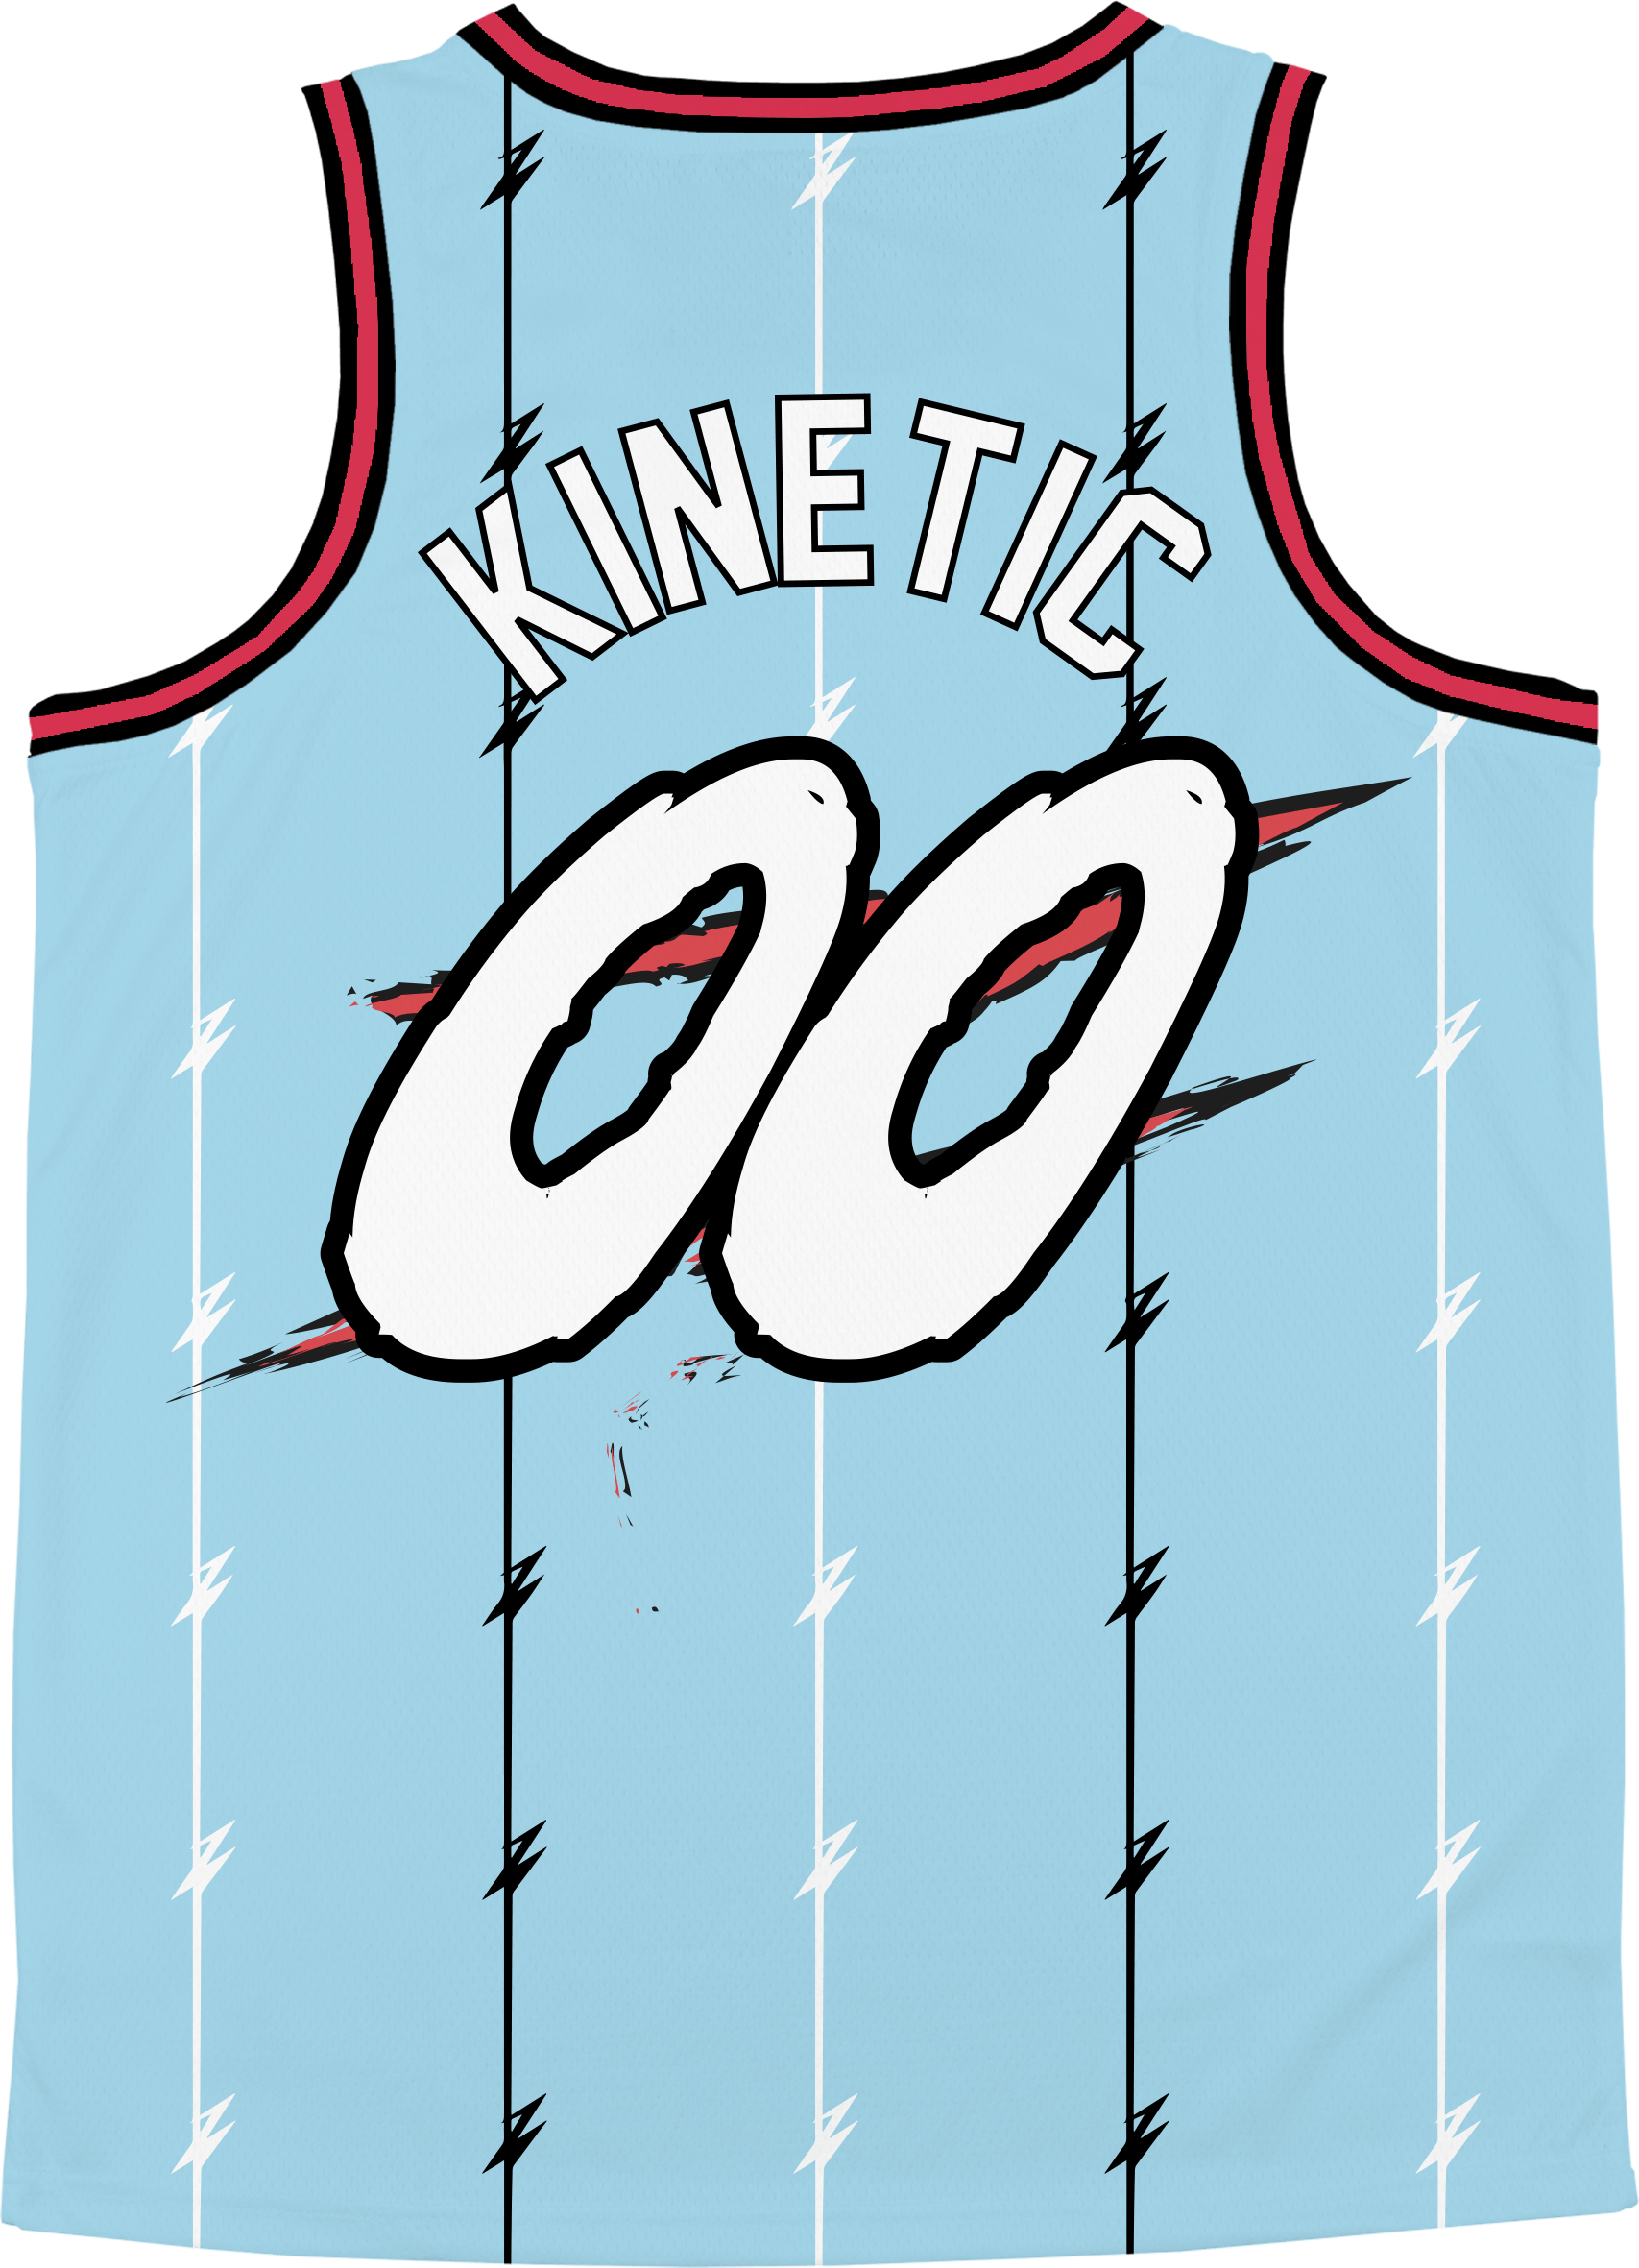 Delta Sigma Phi - Atlantis Basketball Jersey - Kinetic Society